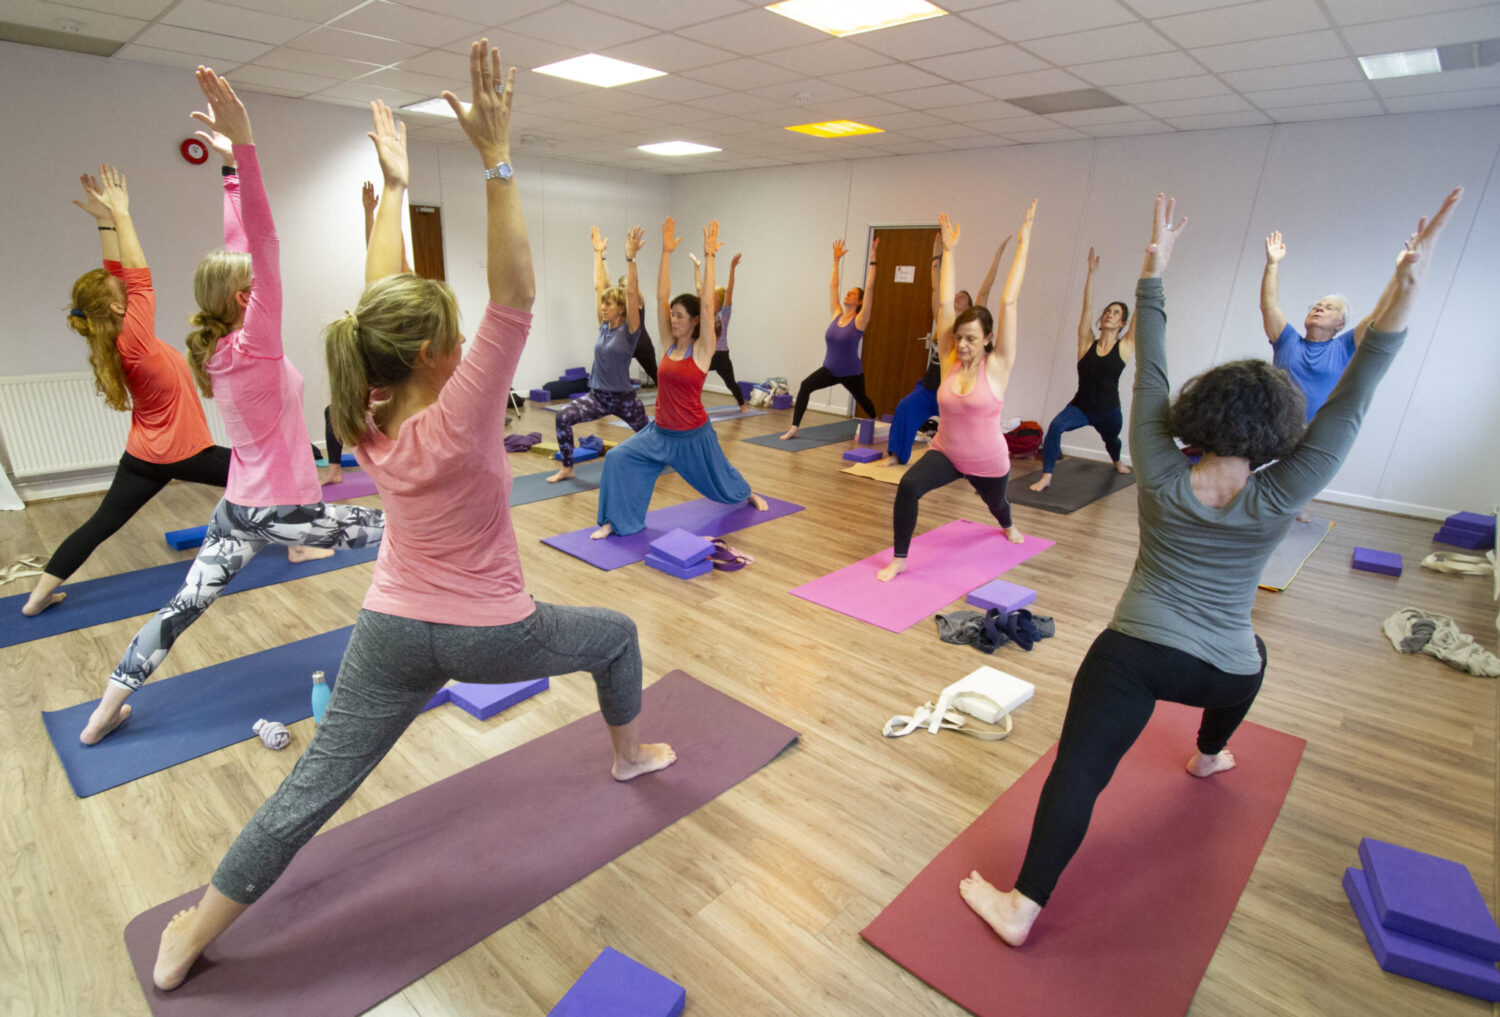 Dorchester Yoga and Therapy Centre – Yoga, Thai Chi, Pilates, and